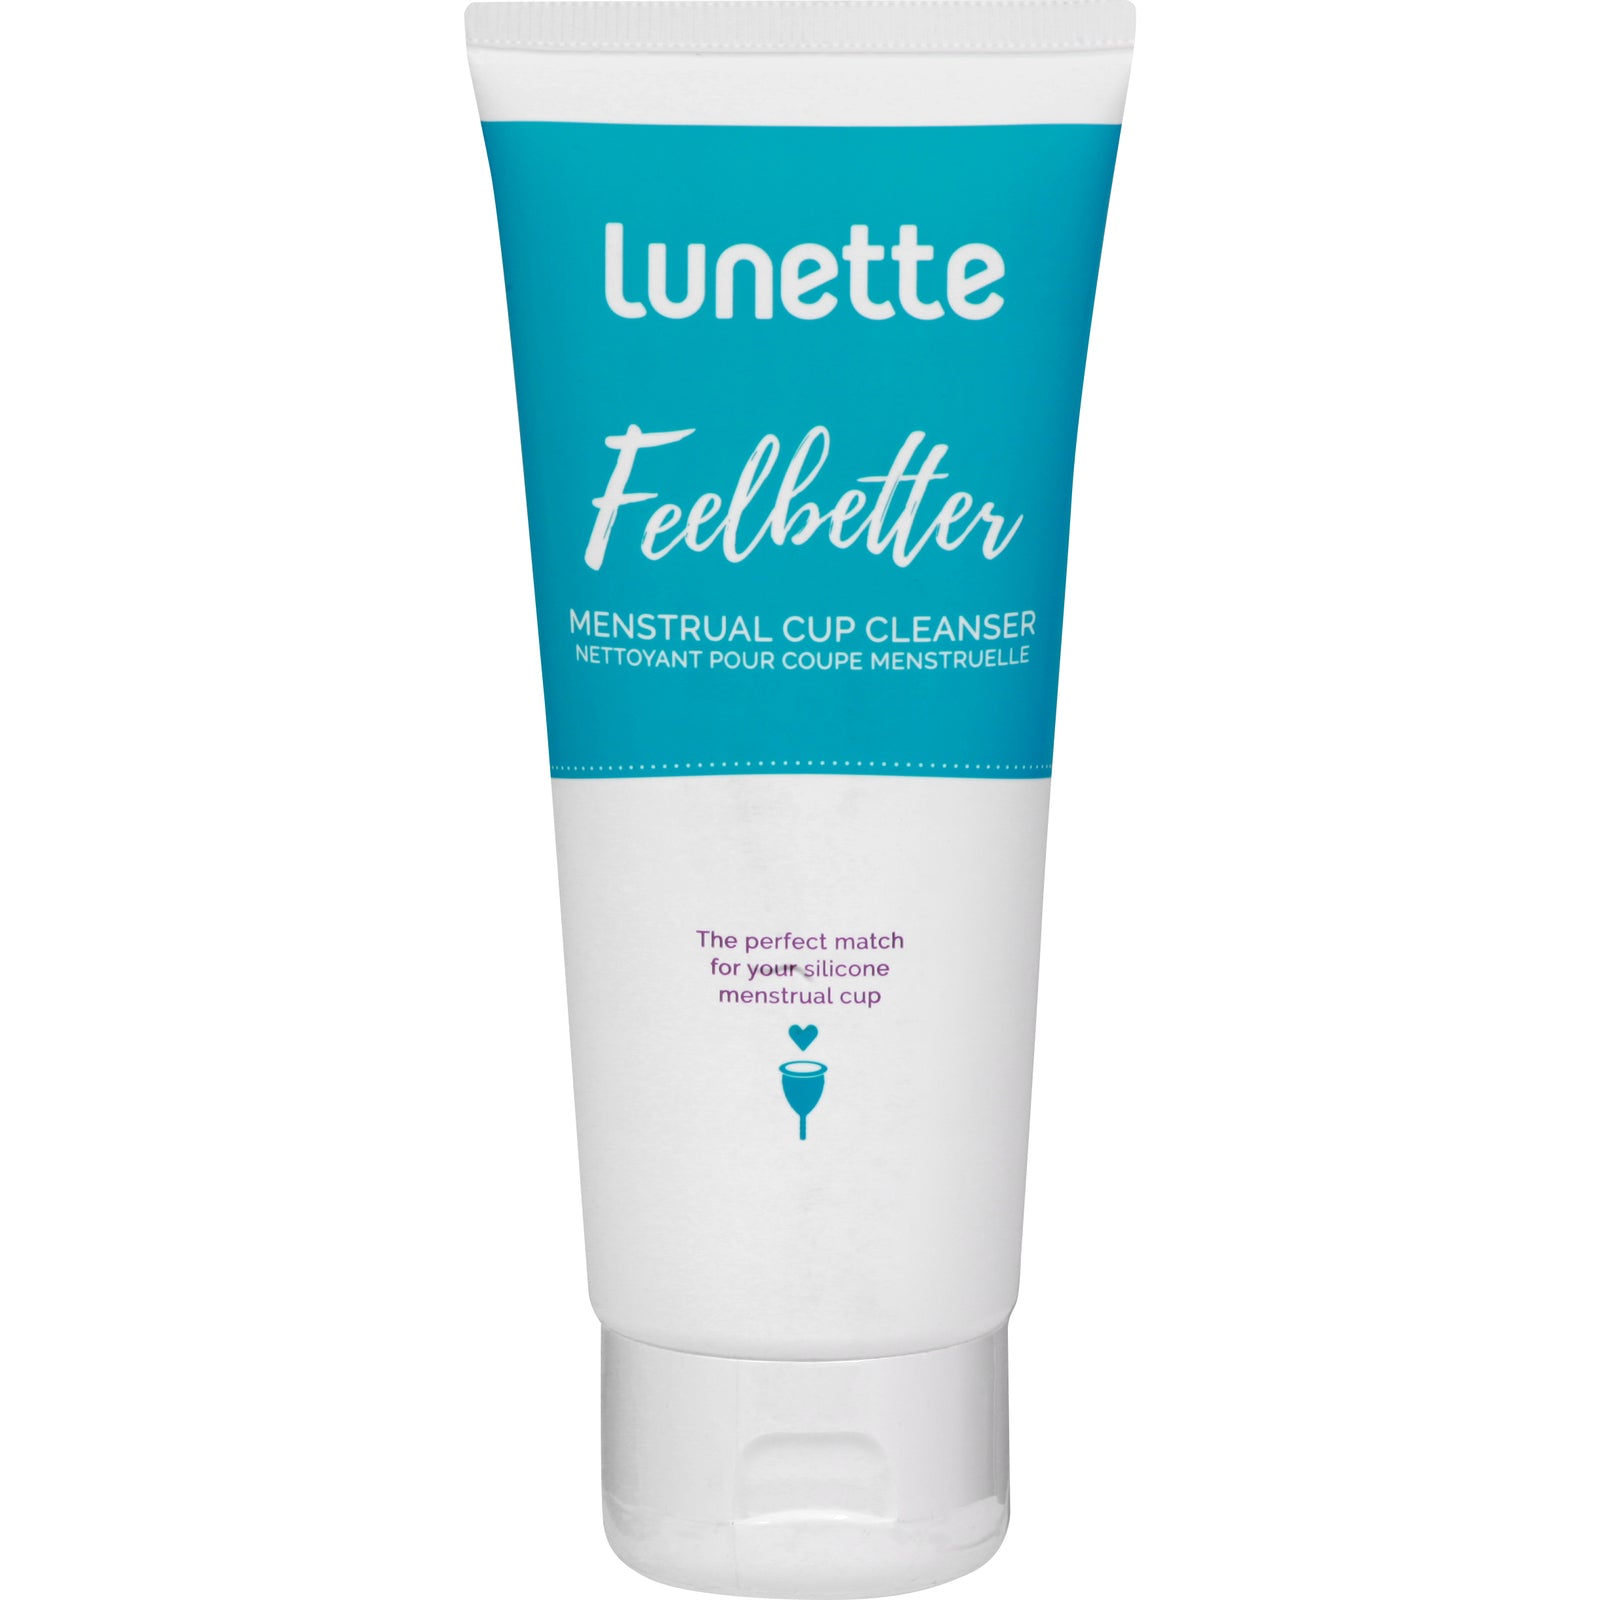 Lunette Feelbetter Cup Cleanser - 3.4 Oz